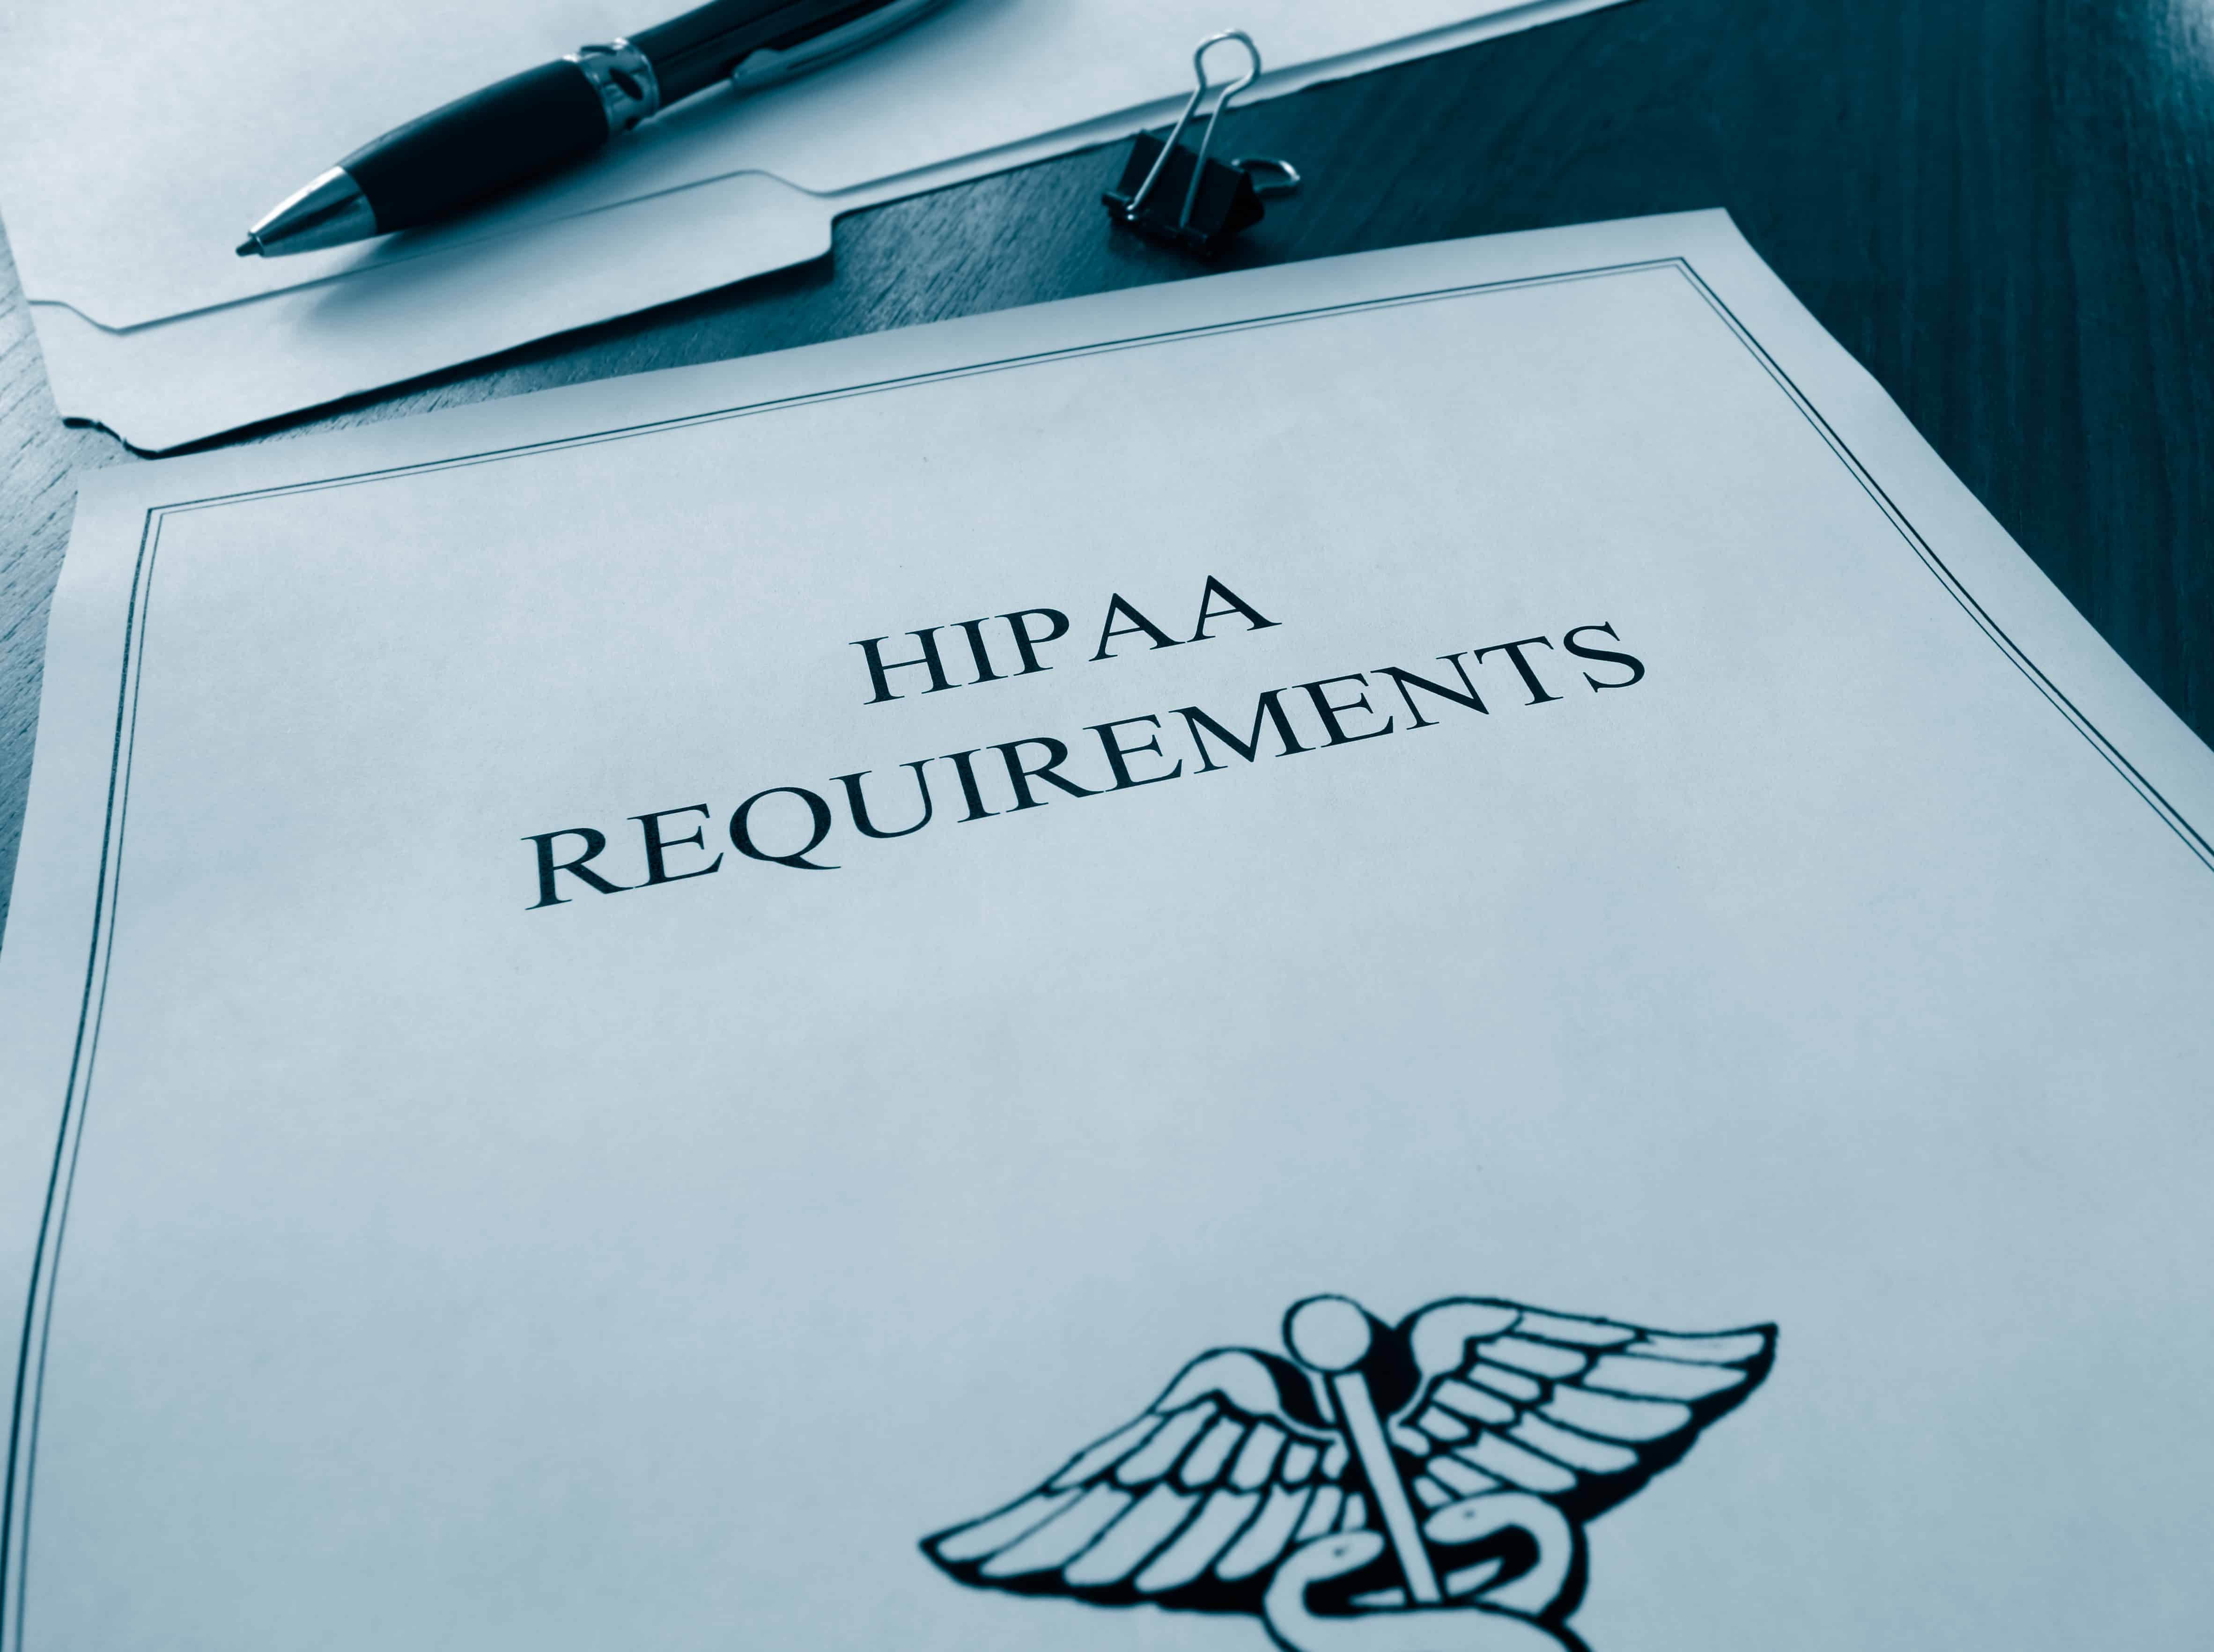 HIPAA documentation